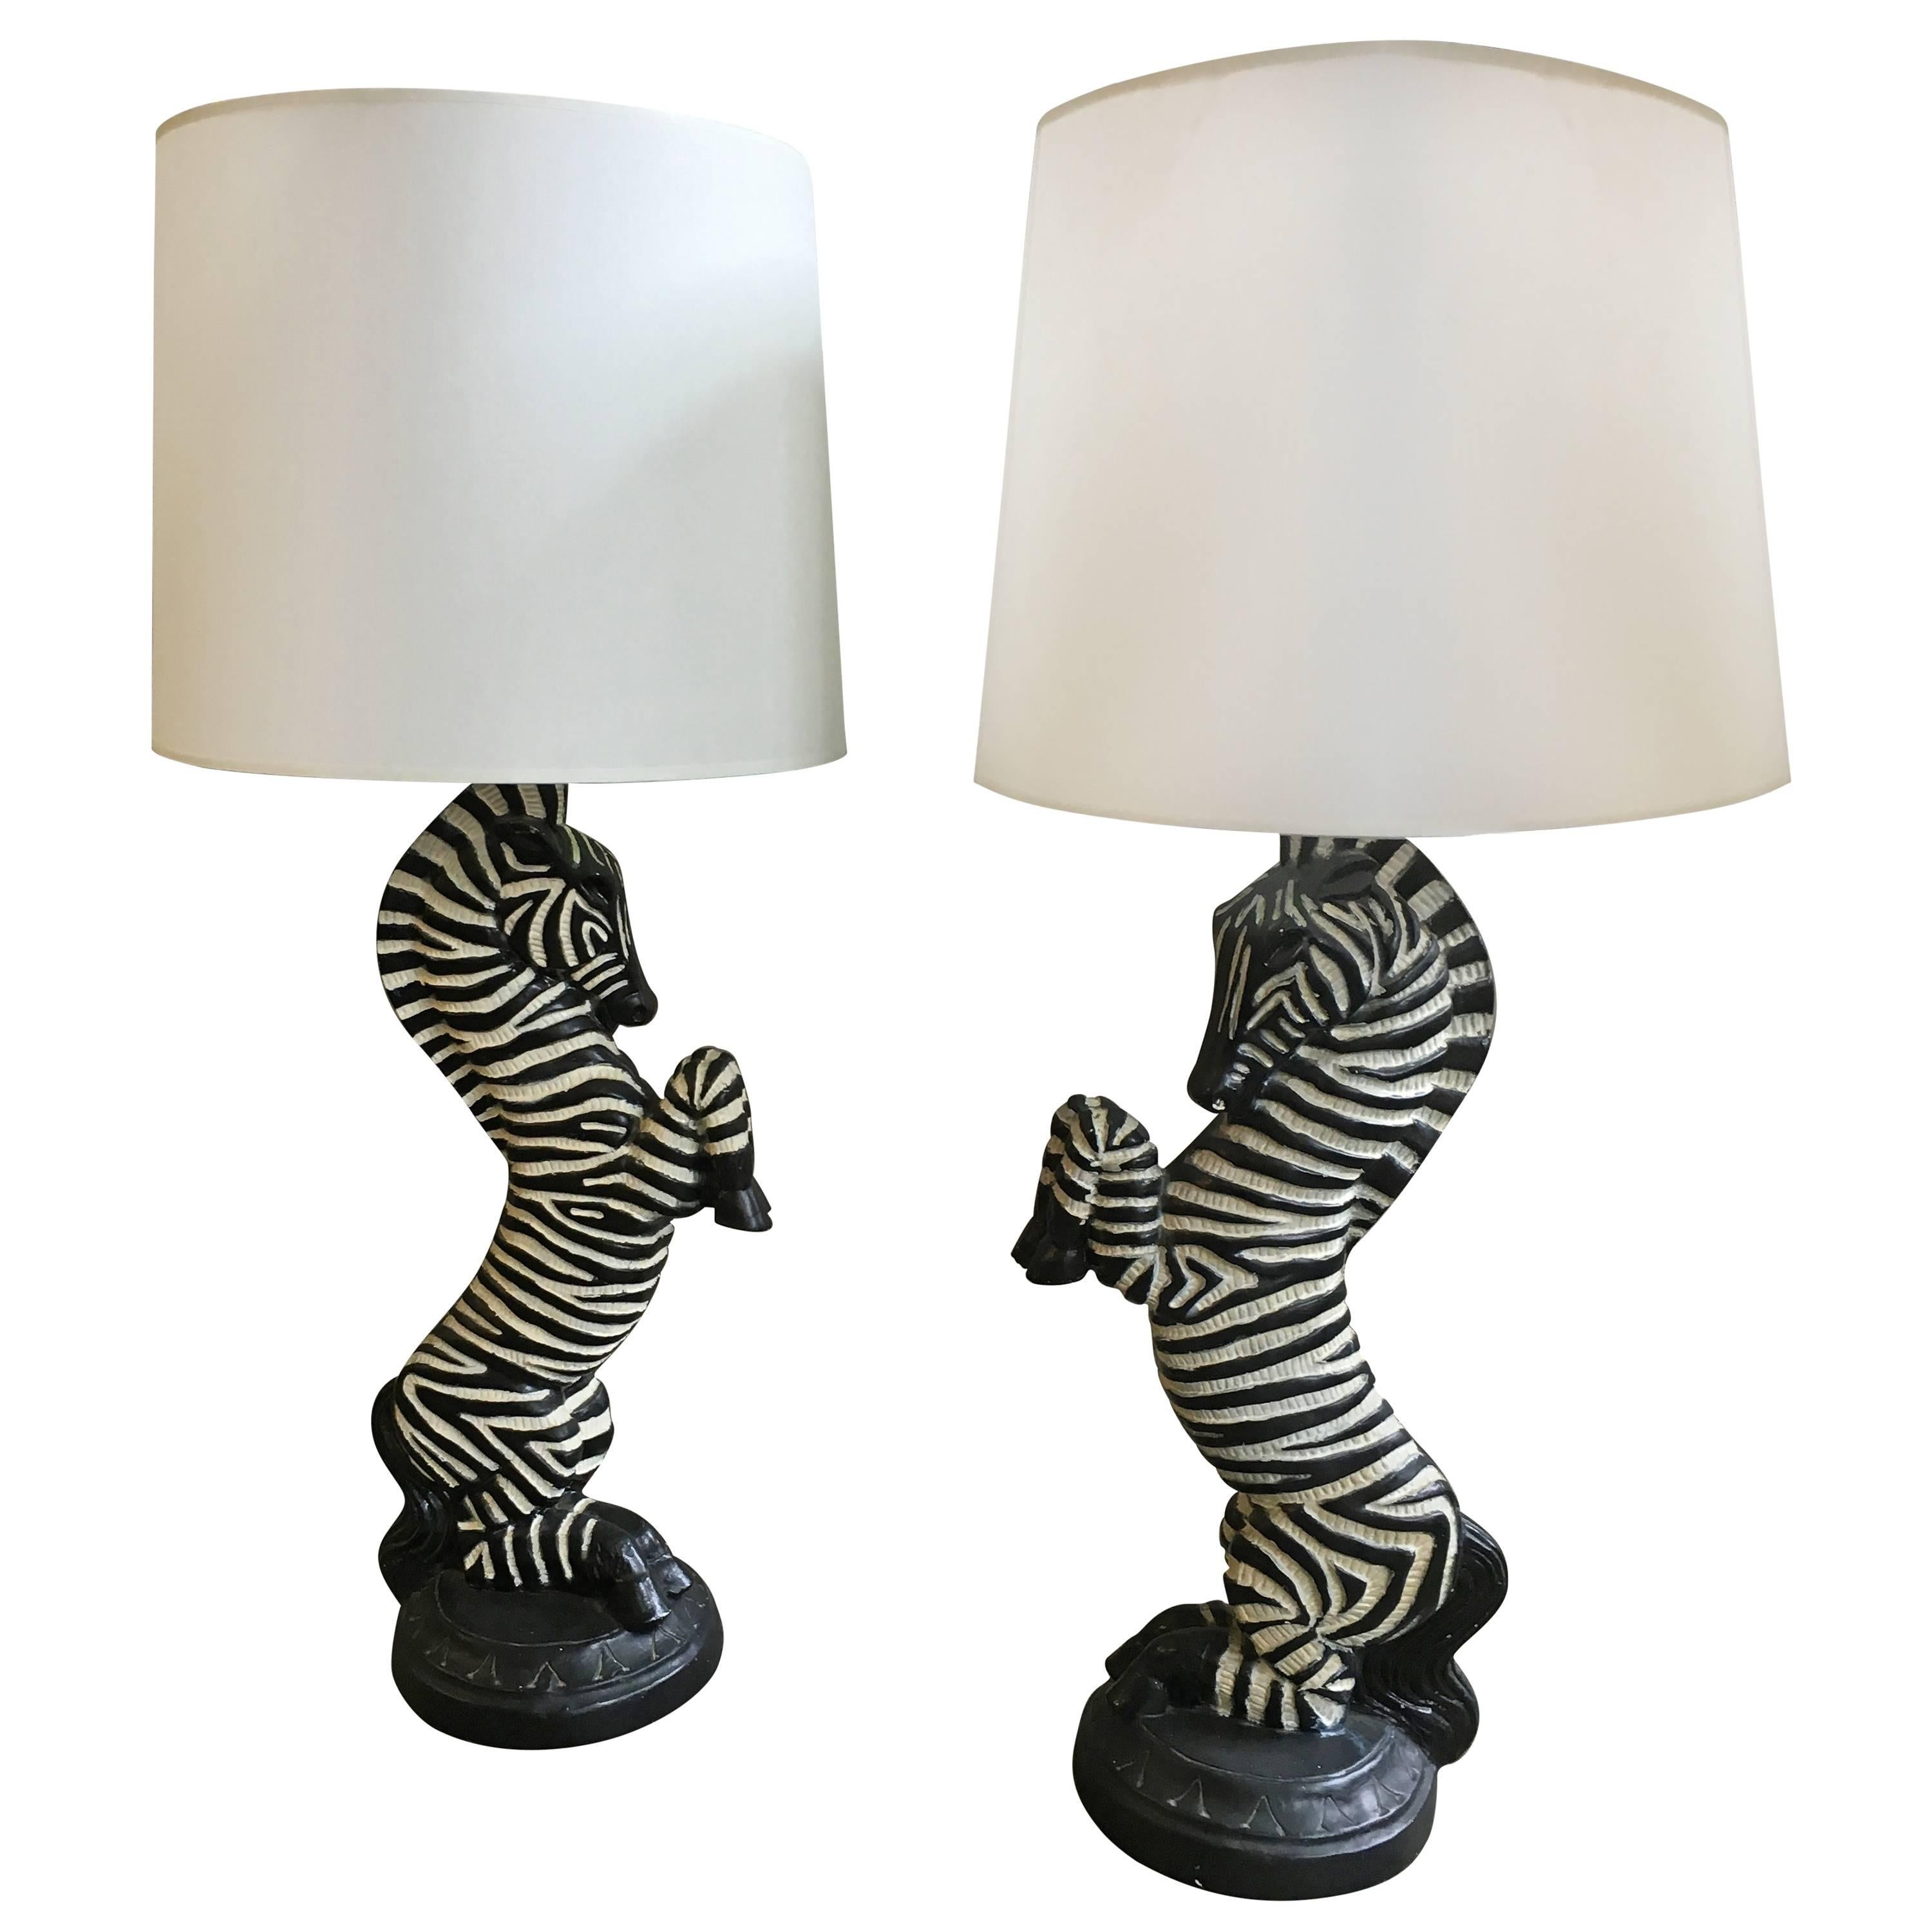 Pair of Mid-Century Zebra Lamps